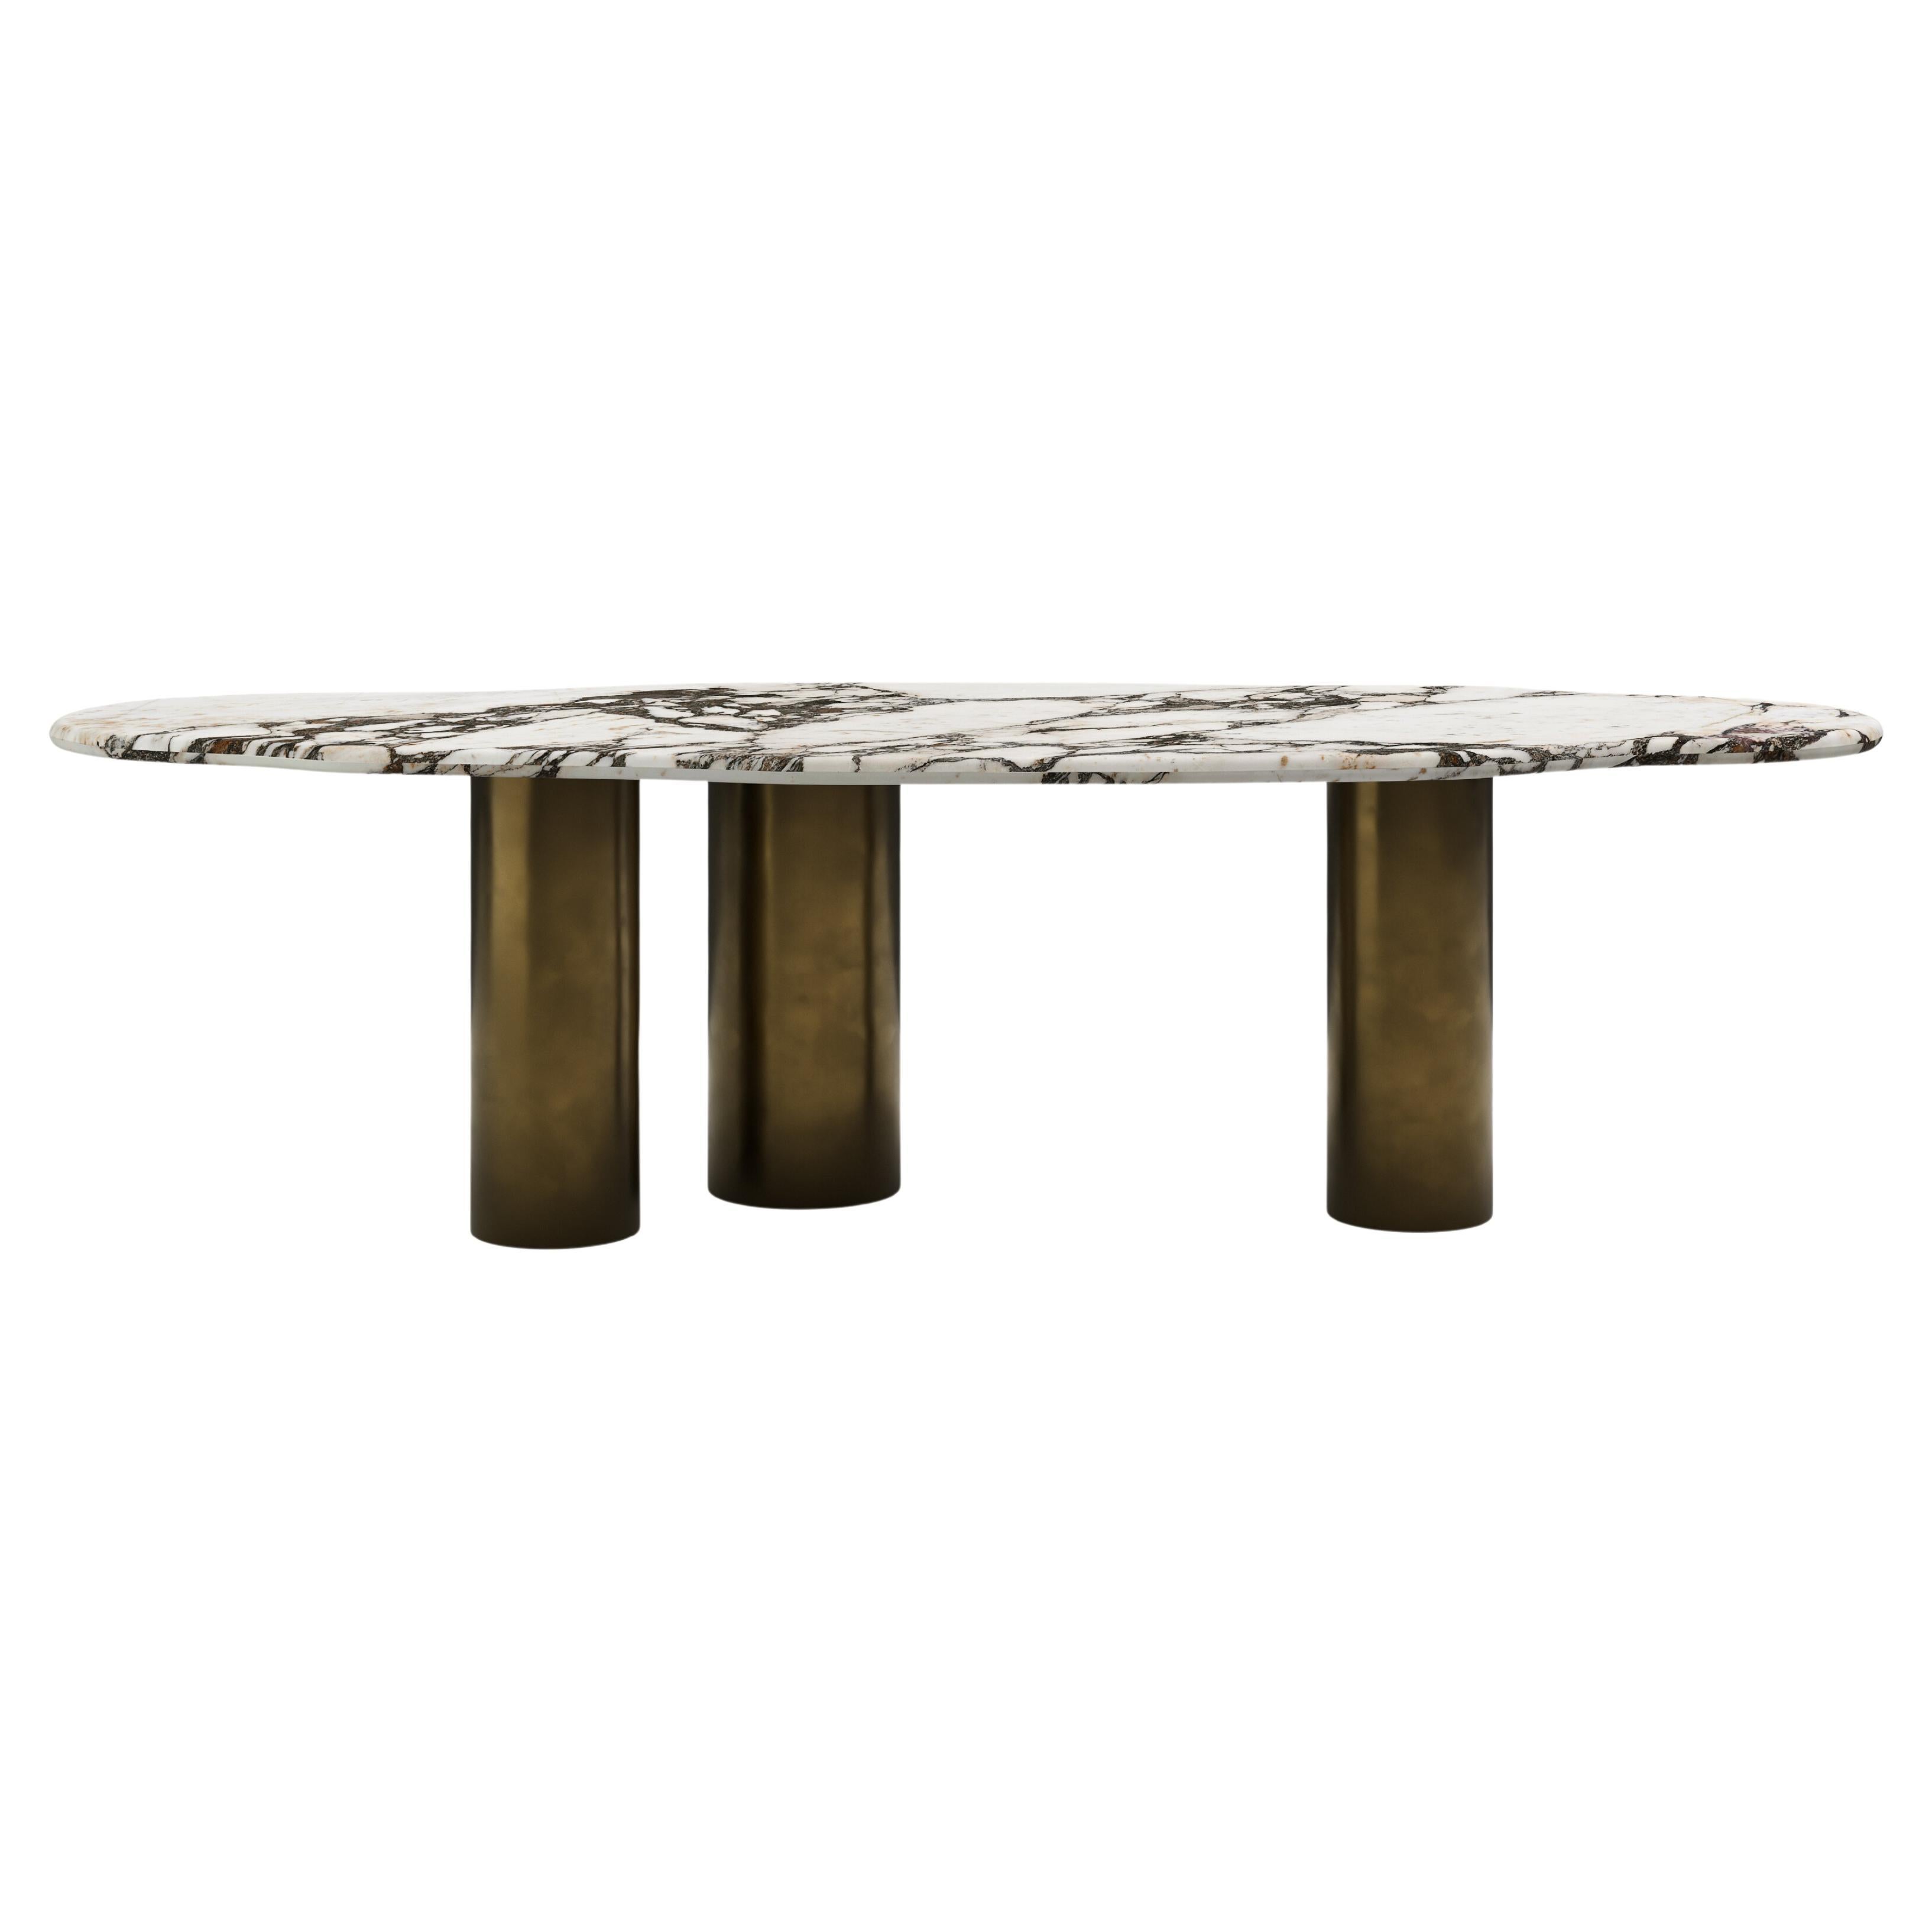 FORM(LA) Lago Freeform Dining Table 118”L x 48”W x 30”H Viola Marble & Bronze For Sale